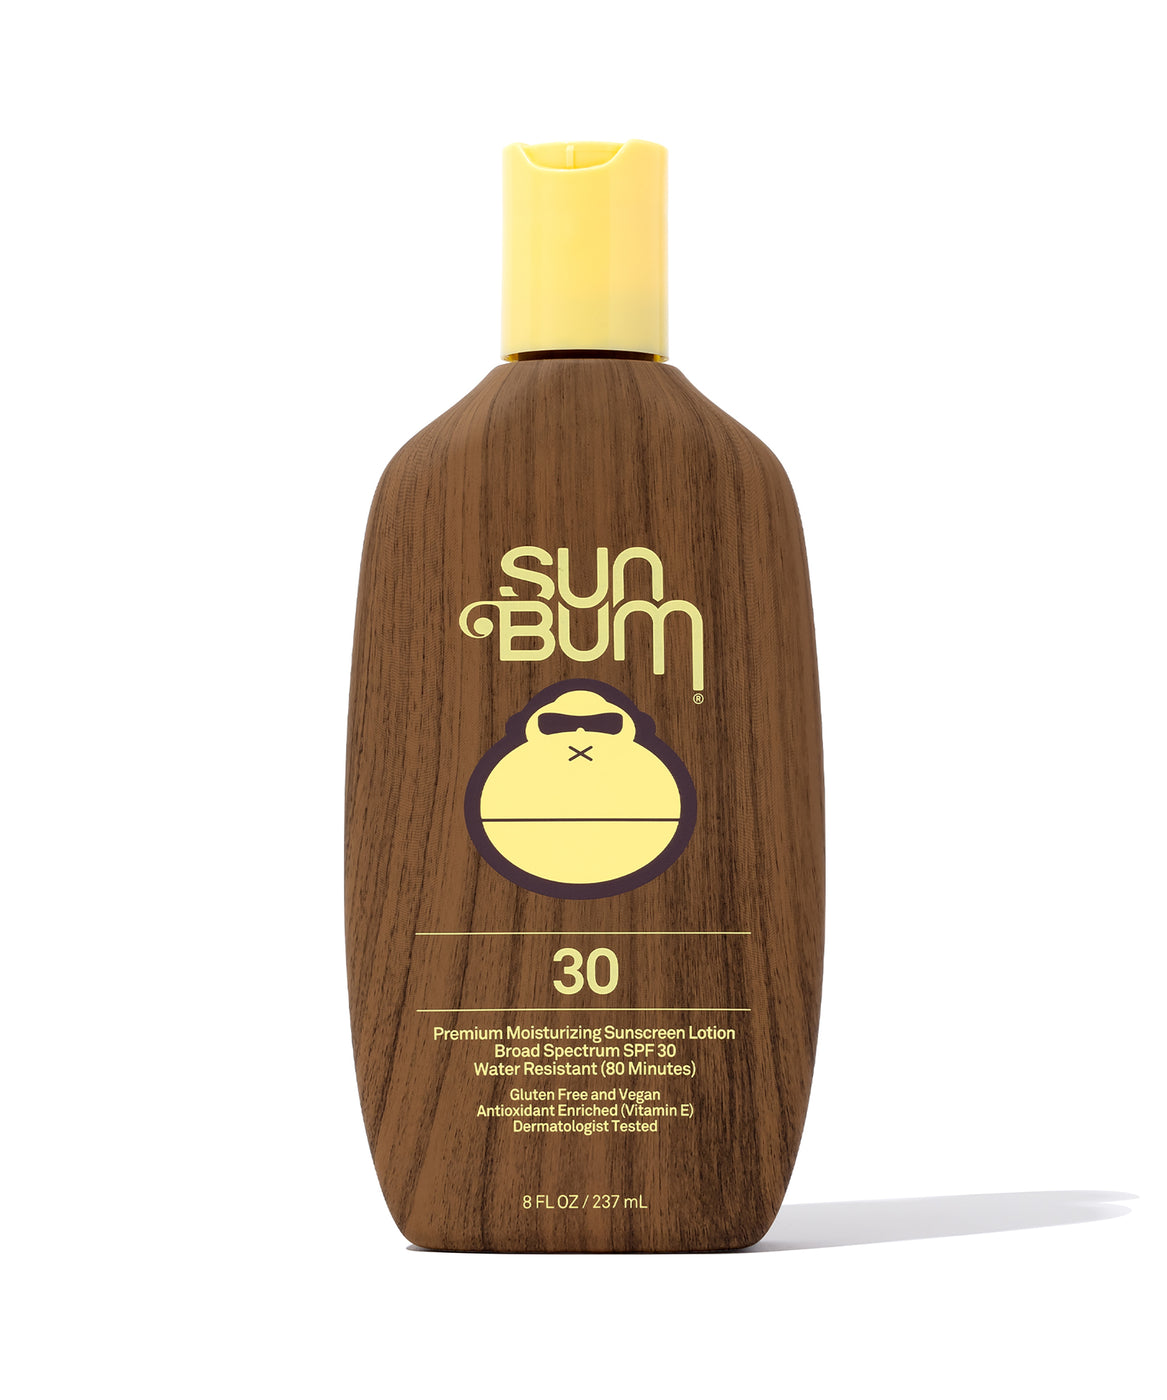 Sun Bum Original SPF 30 Sunscreen Lotion